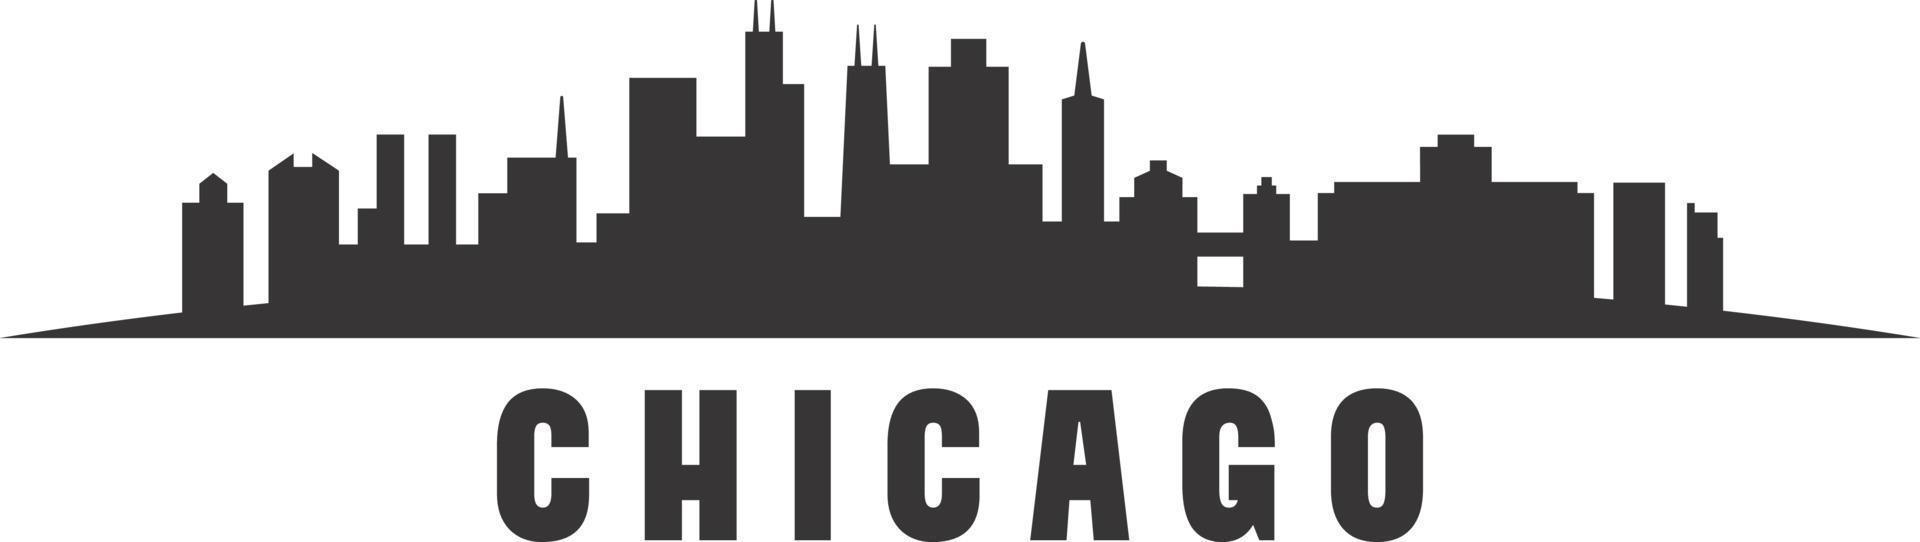 Chicago skyline silhouette vector